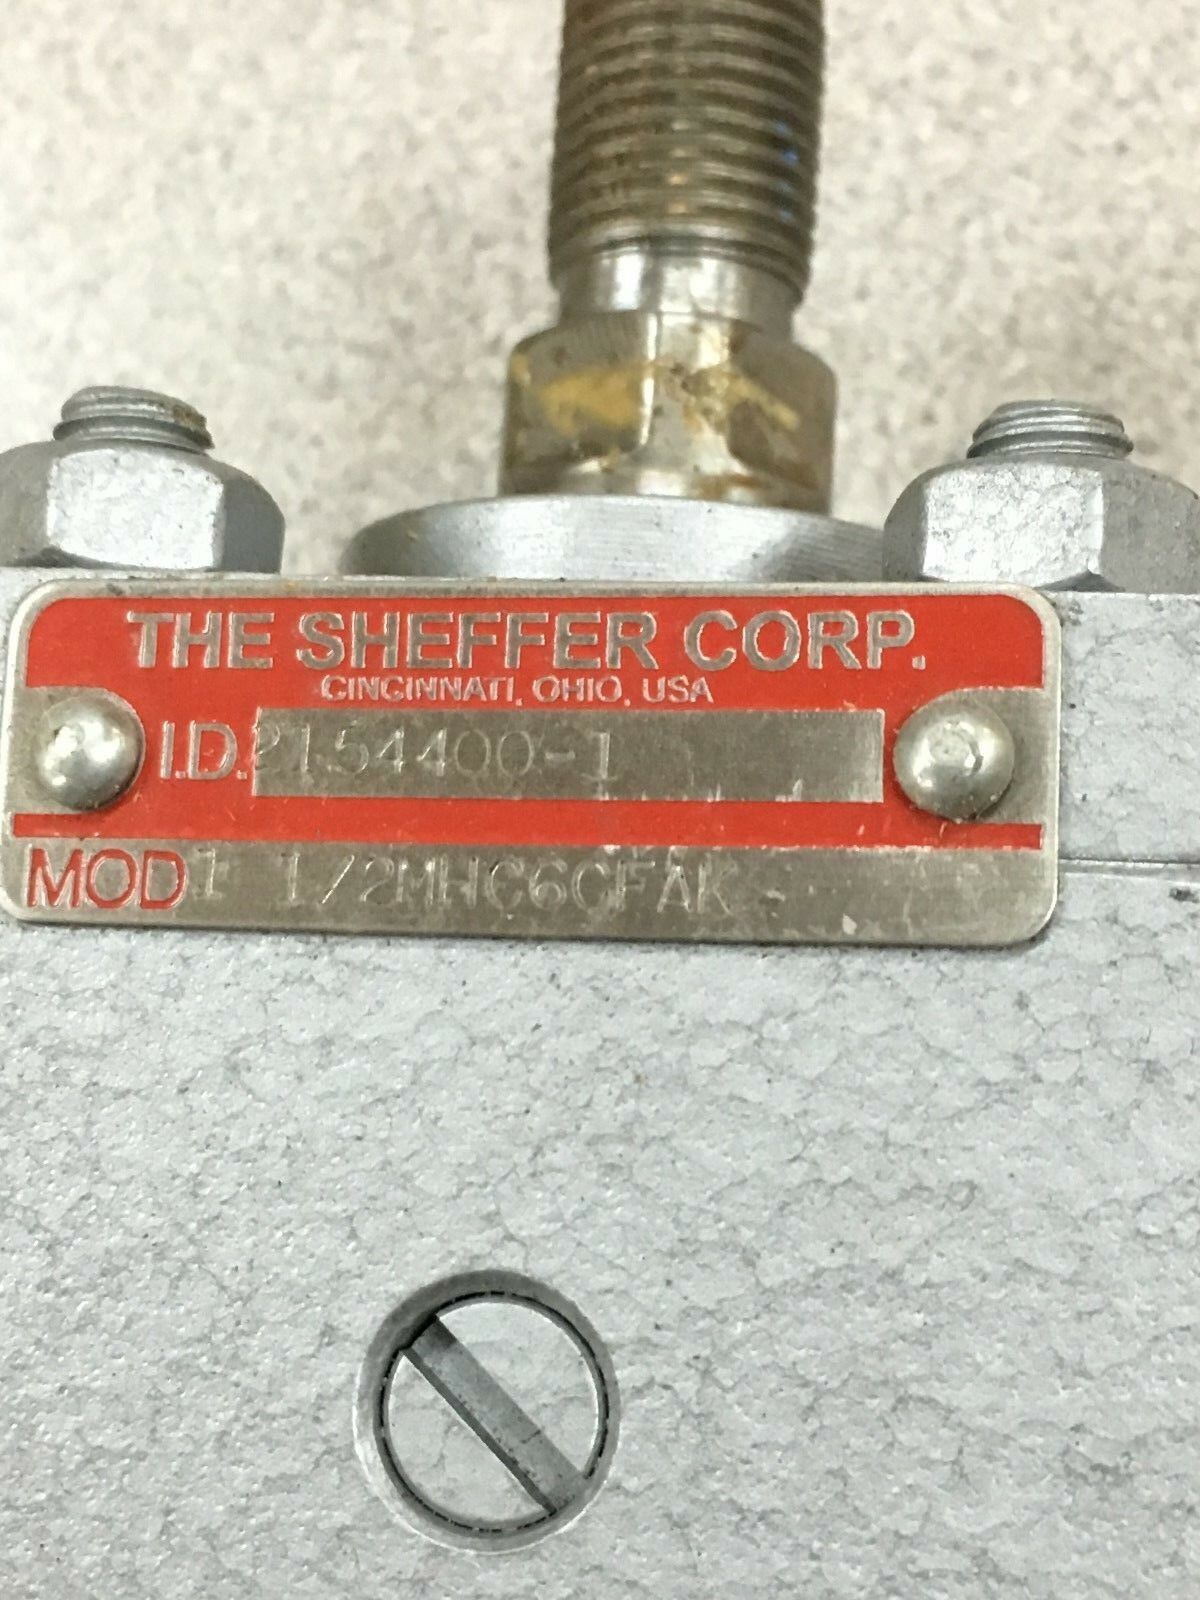 NEW NO BOX SHEFFER CORP. 2154400-1 CYLINDER 1-1/2MHC6CFAK